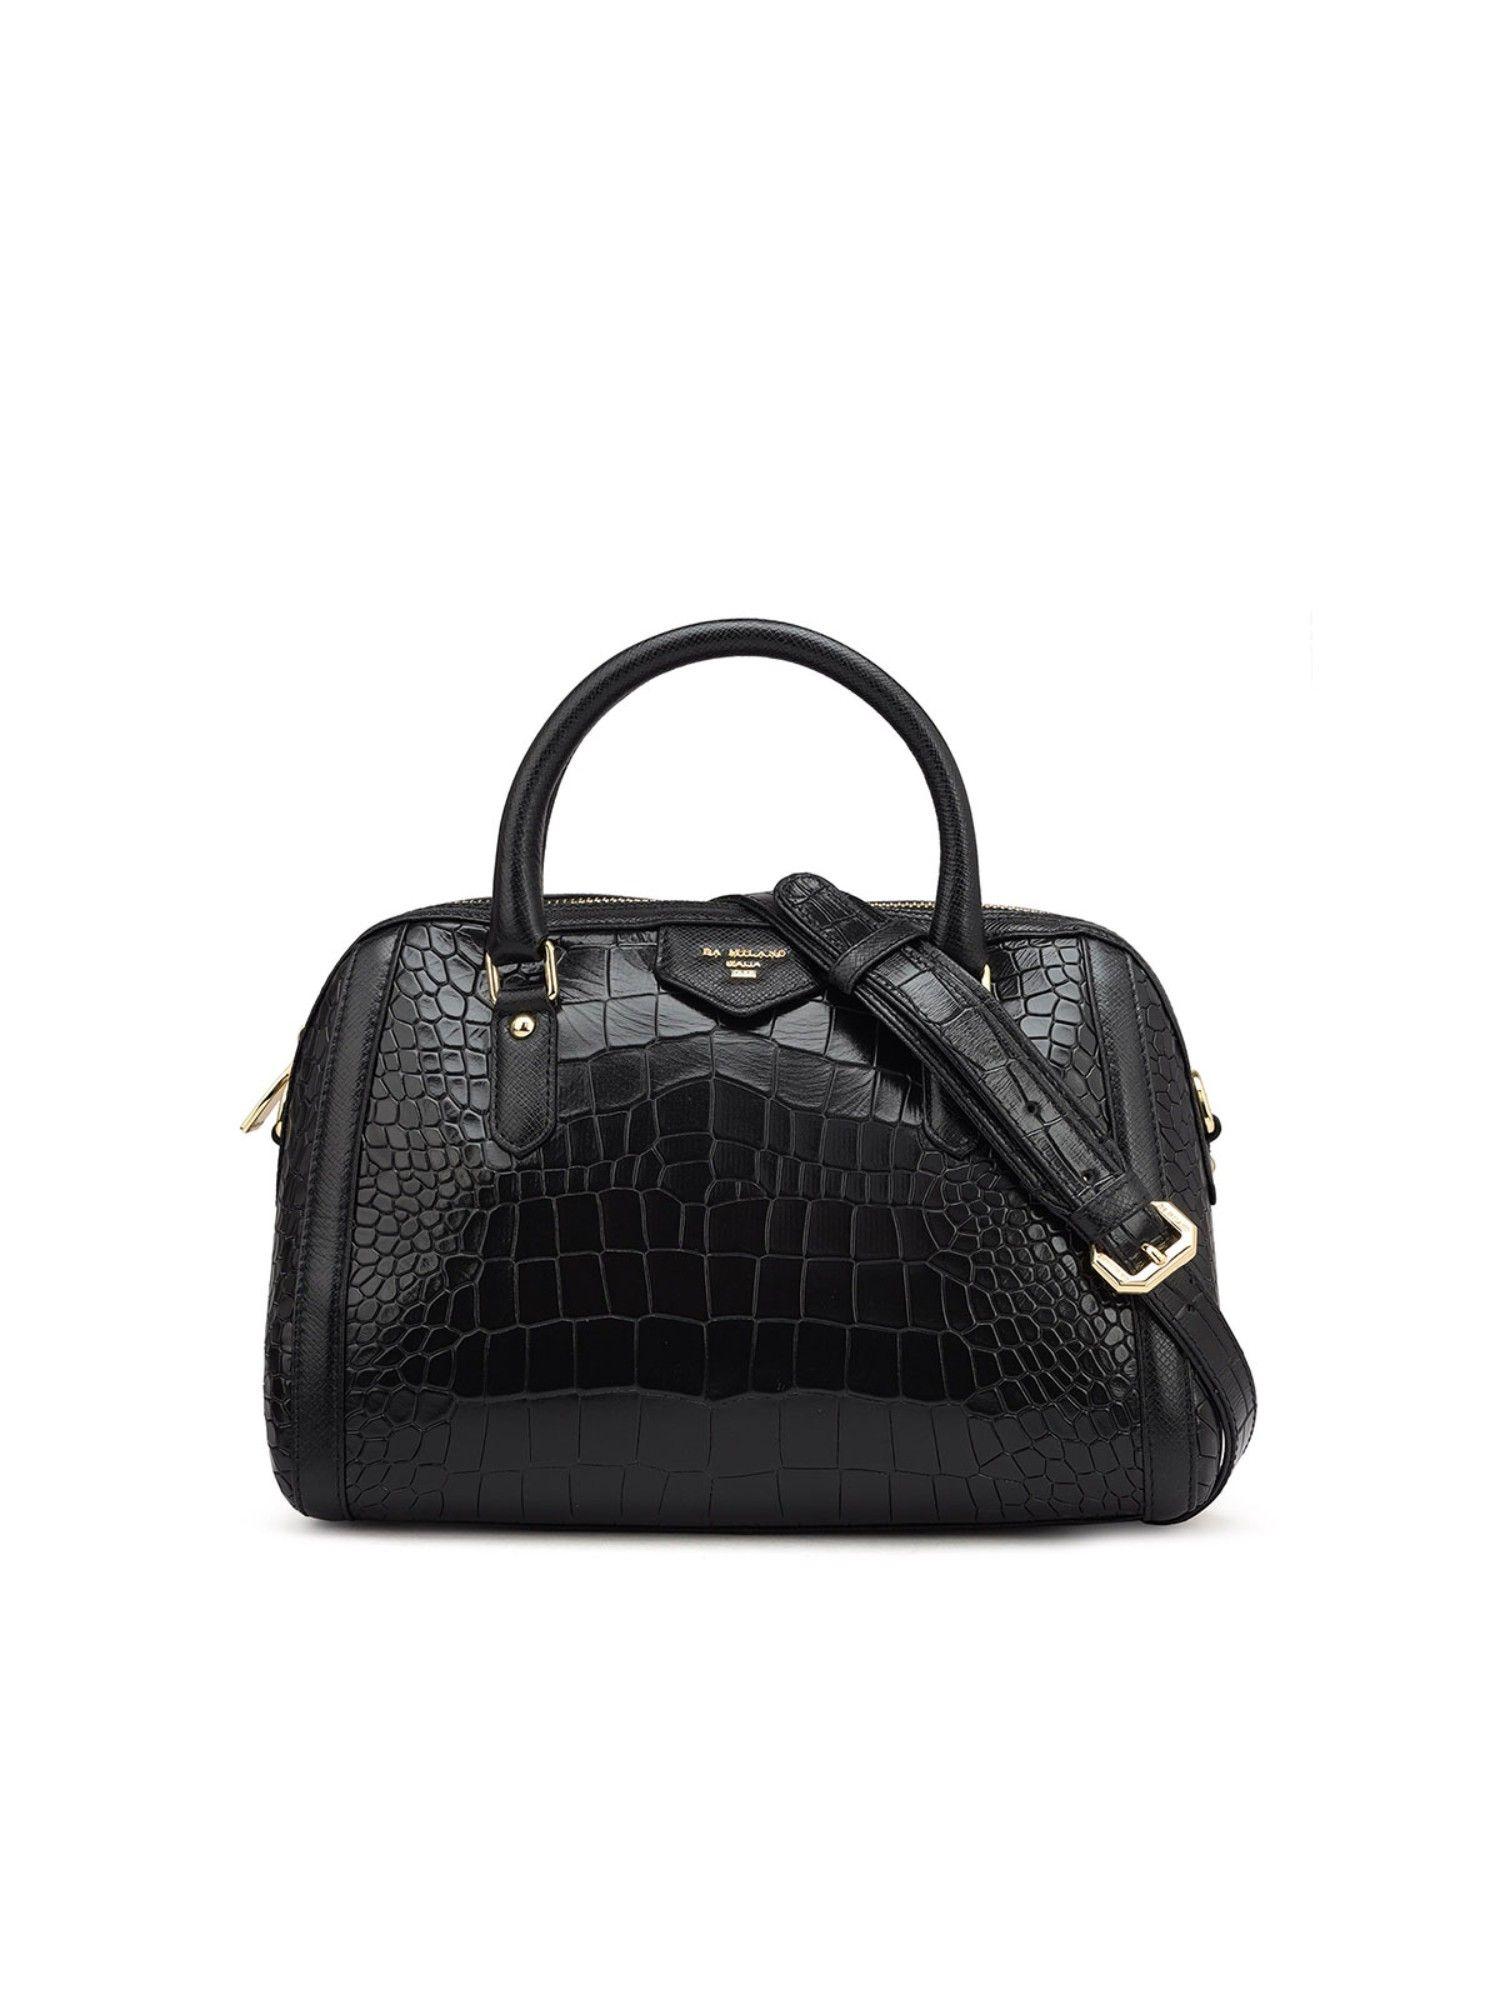 women's genuine leather black satchel bag